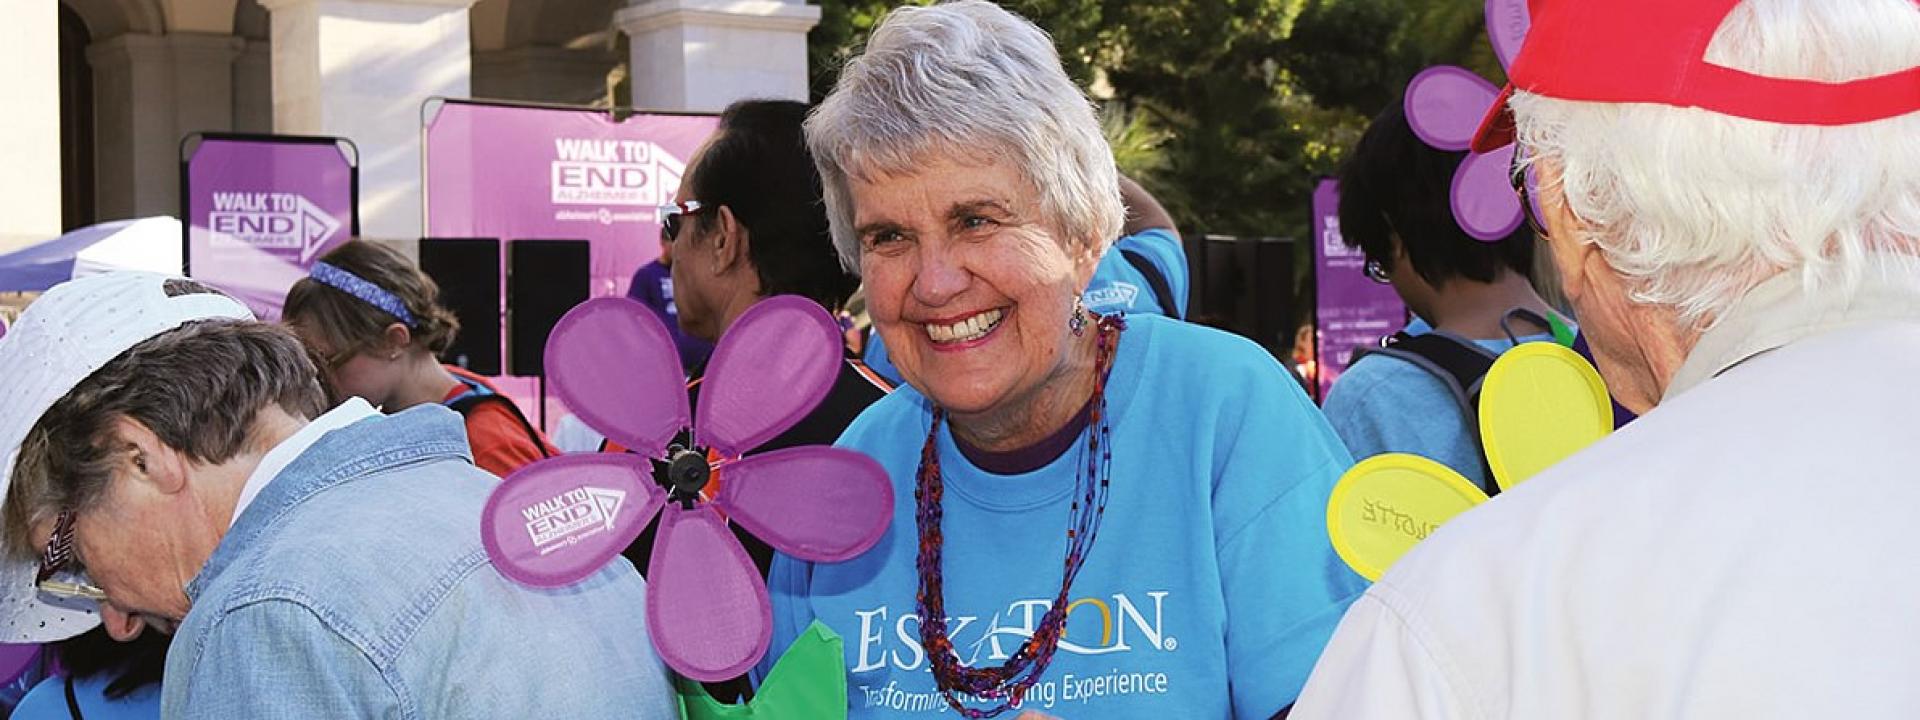 Smiling Eskaton resident at the Walk to End Alzheimer's event